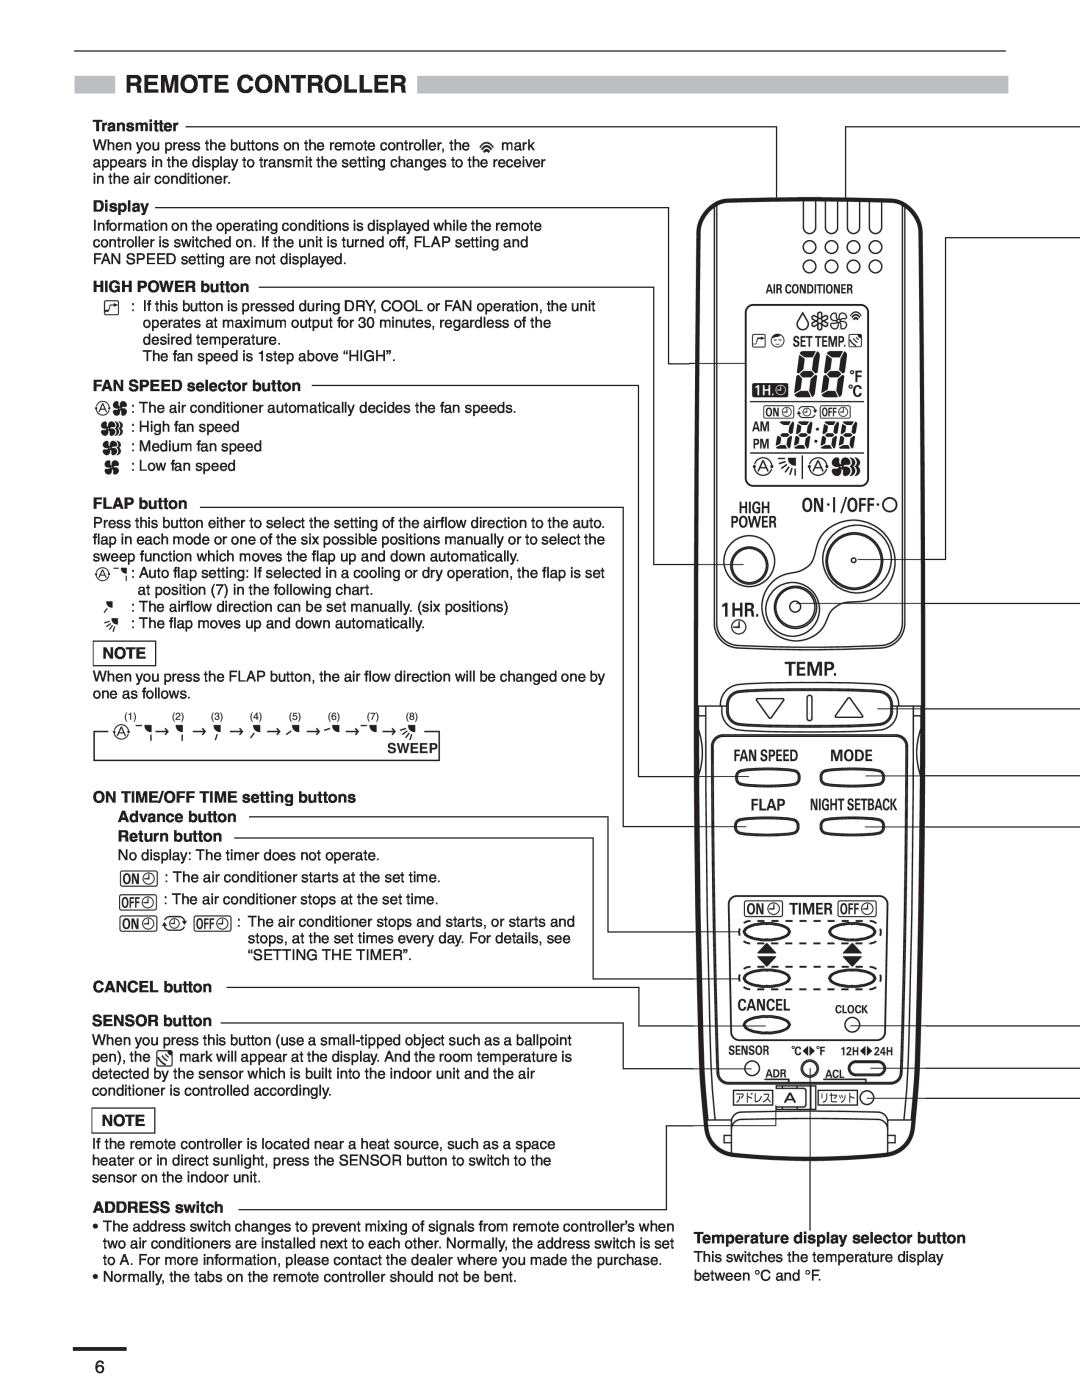 Panasonic CU-KS18NKUA Remote Controller, Transmitter, Display, HIGH POWER button, FAN SPEED selector button, FLAP button 